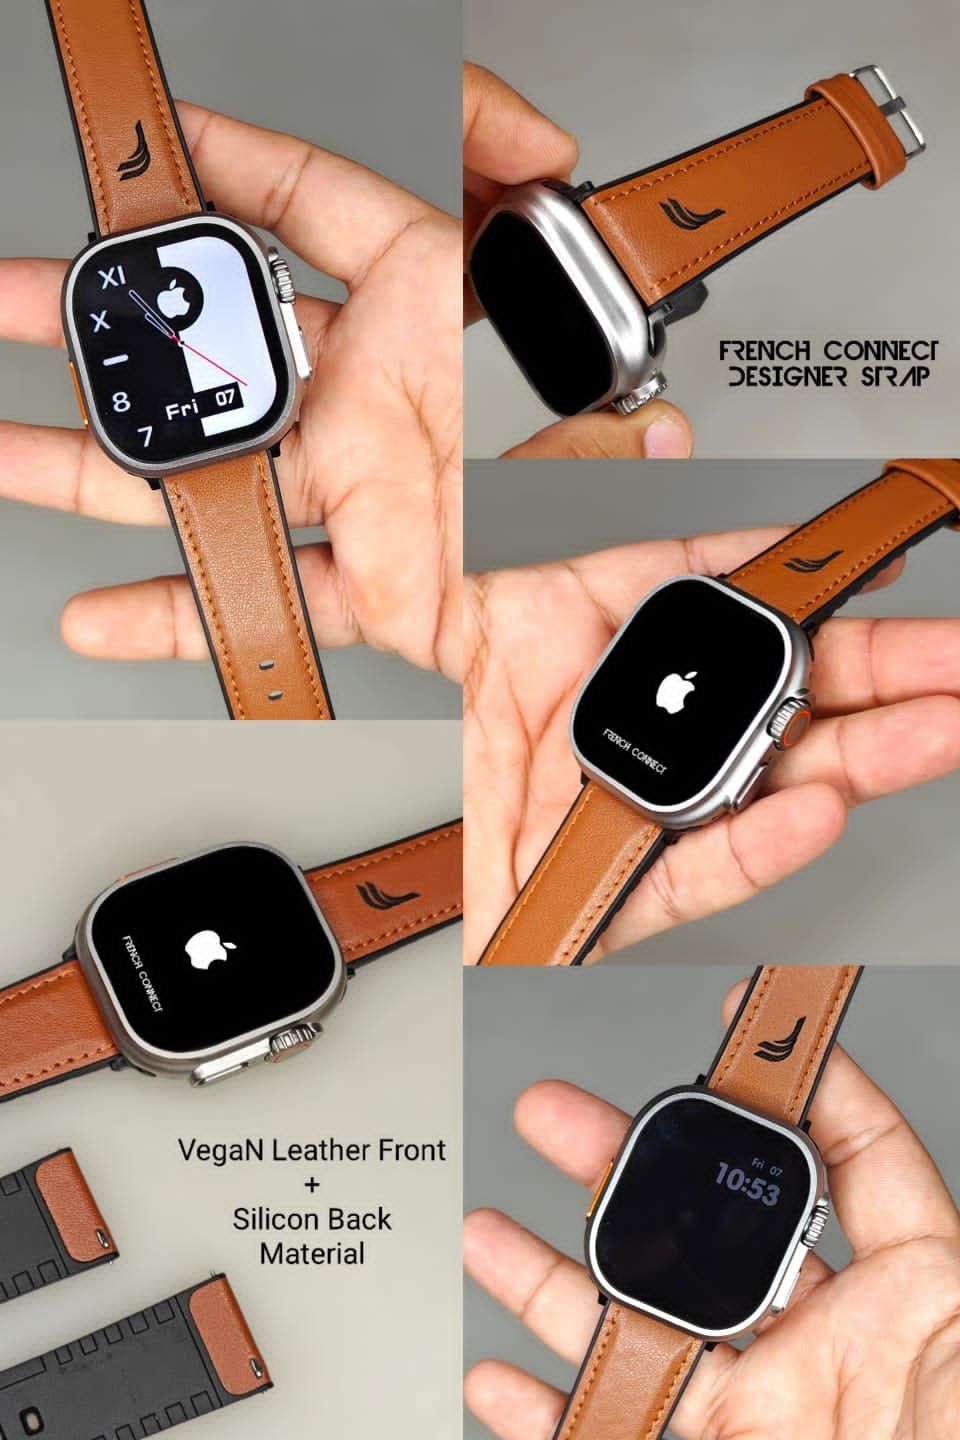 Apple Watch Ultra 2 GPS + Cellular, 49mm Titanium Case with Blue Ocean